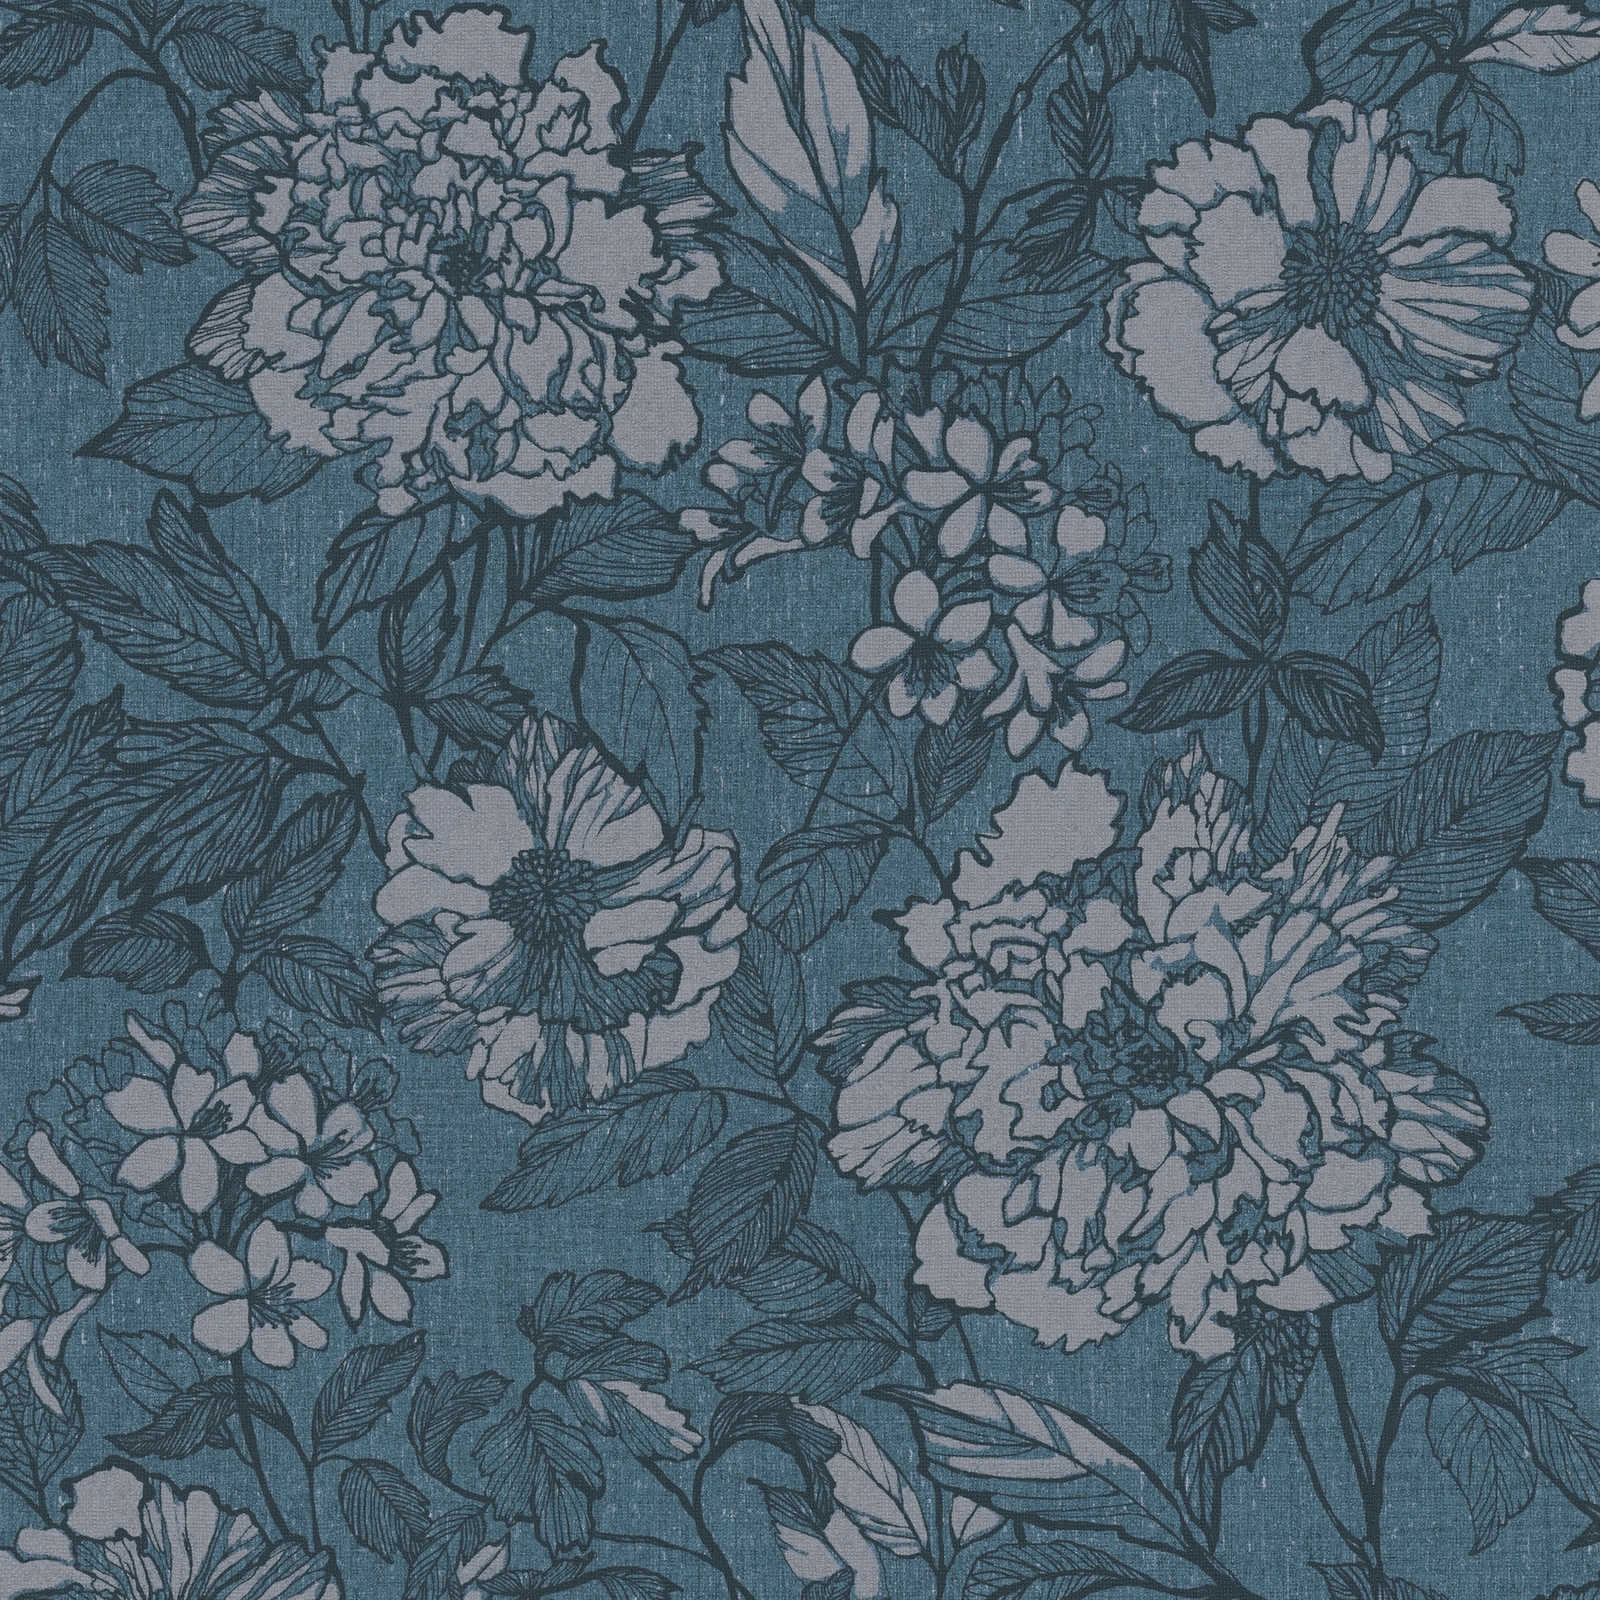         Papel pintado de aspecto textil petróleo con motivos florales - azul, gris
    